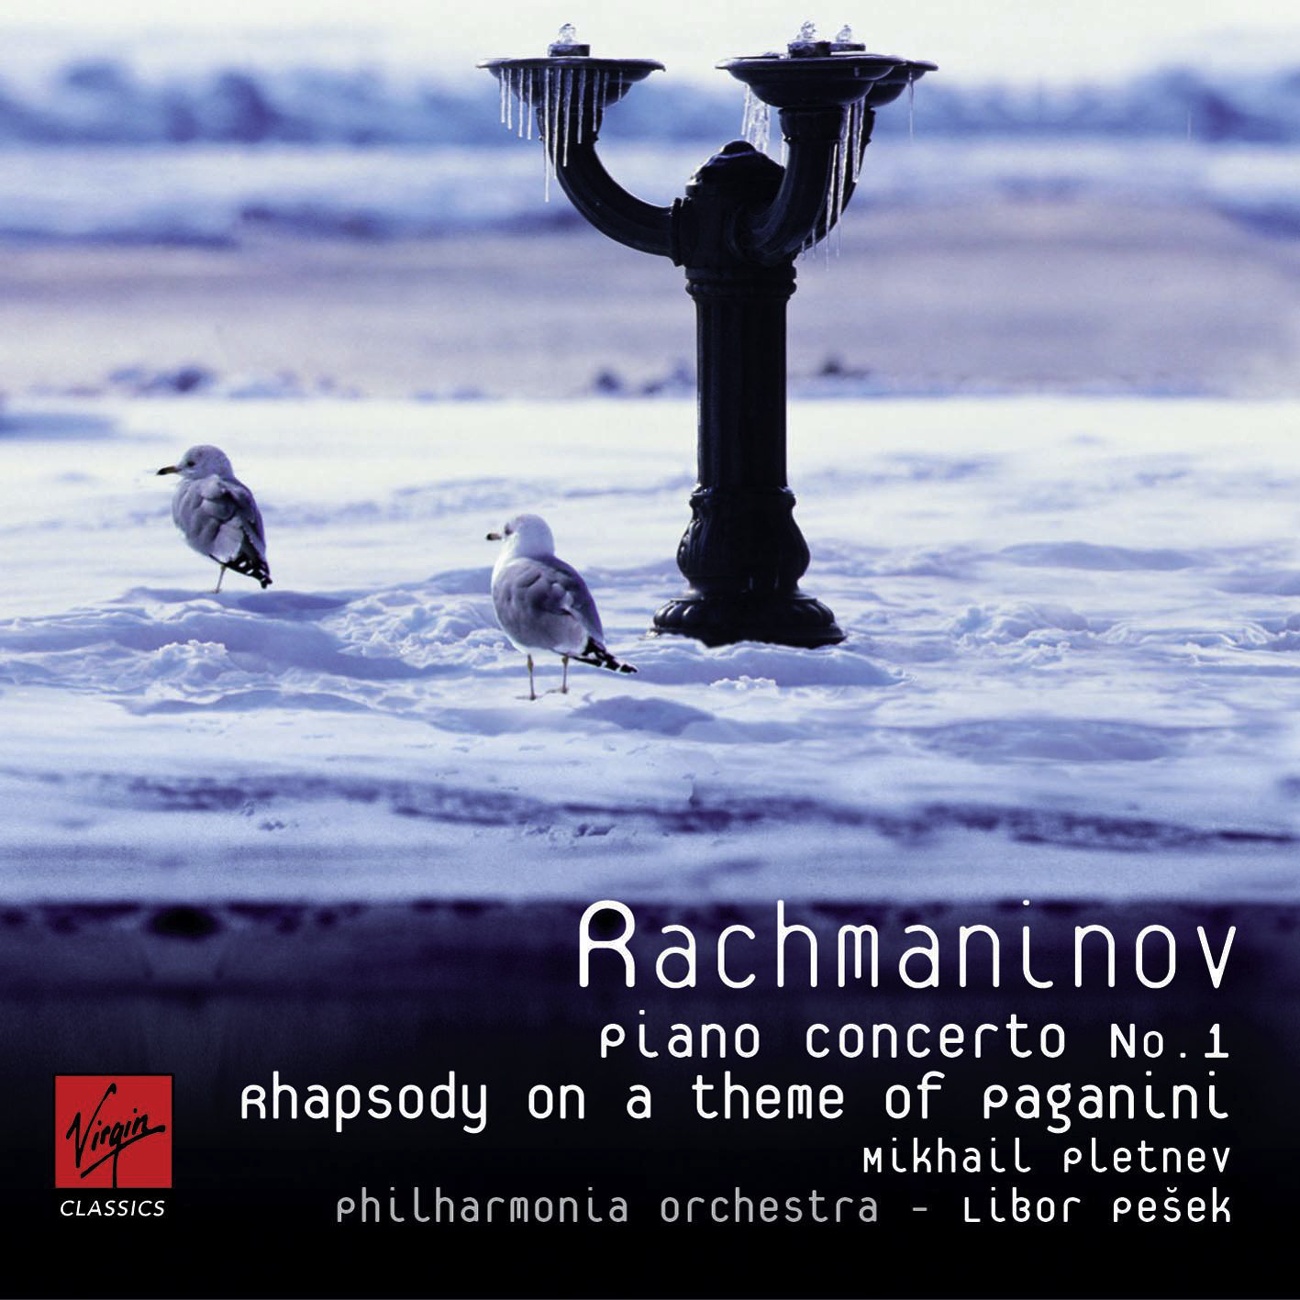 Rhapsody on a Theme of Paganini: Variation XIX - L'istesso tempo